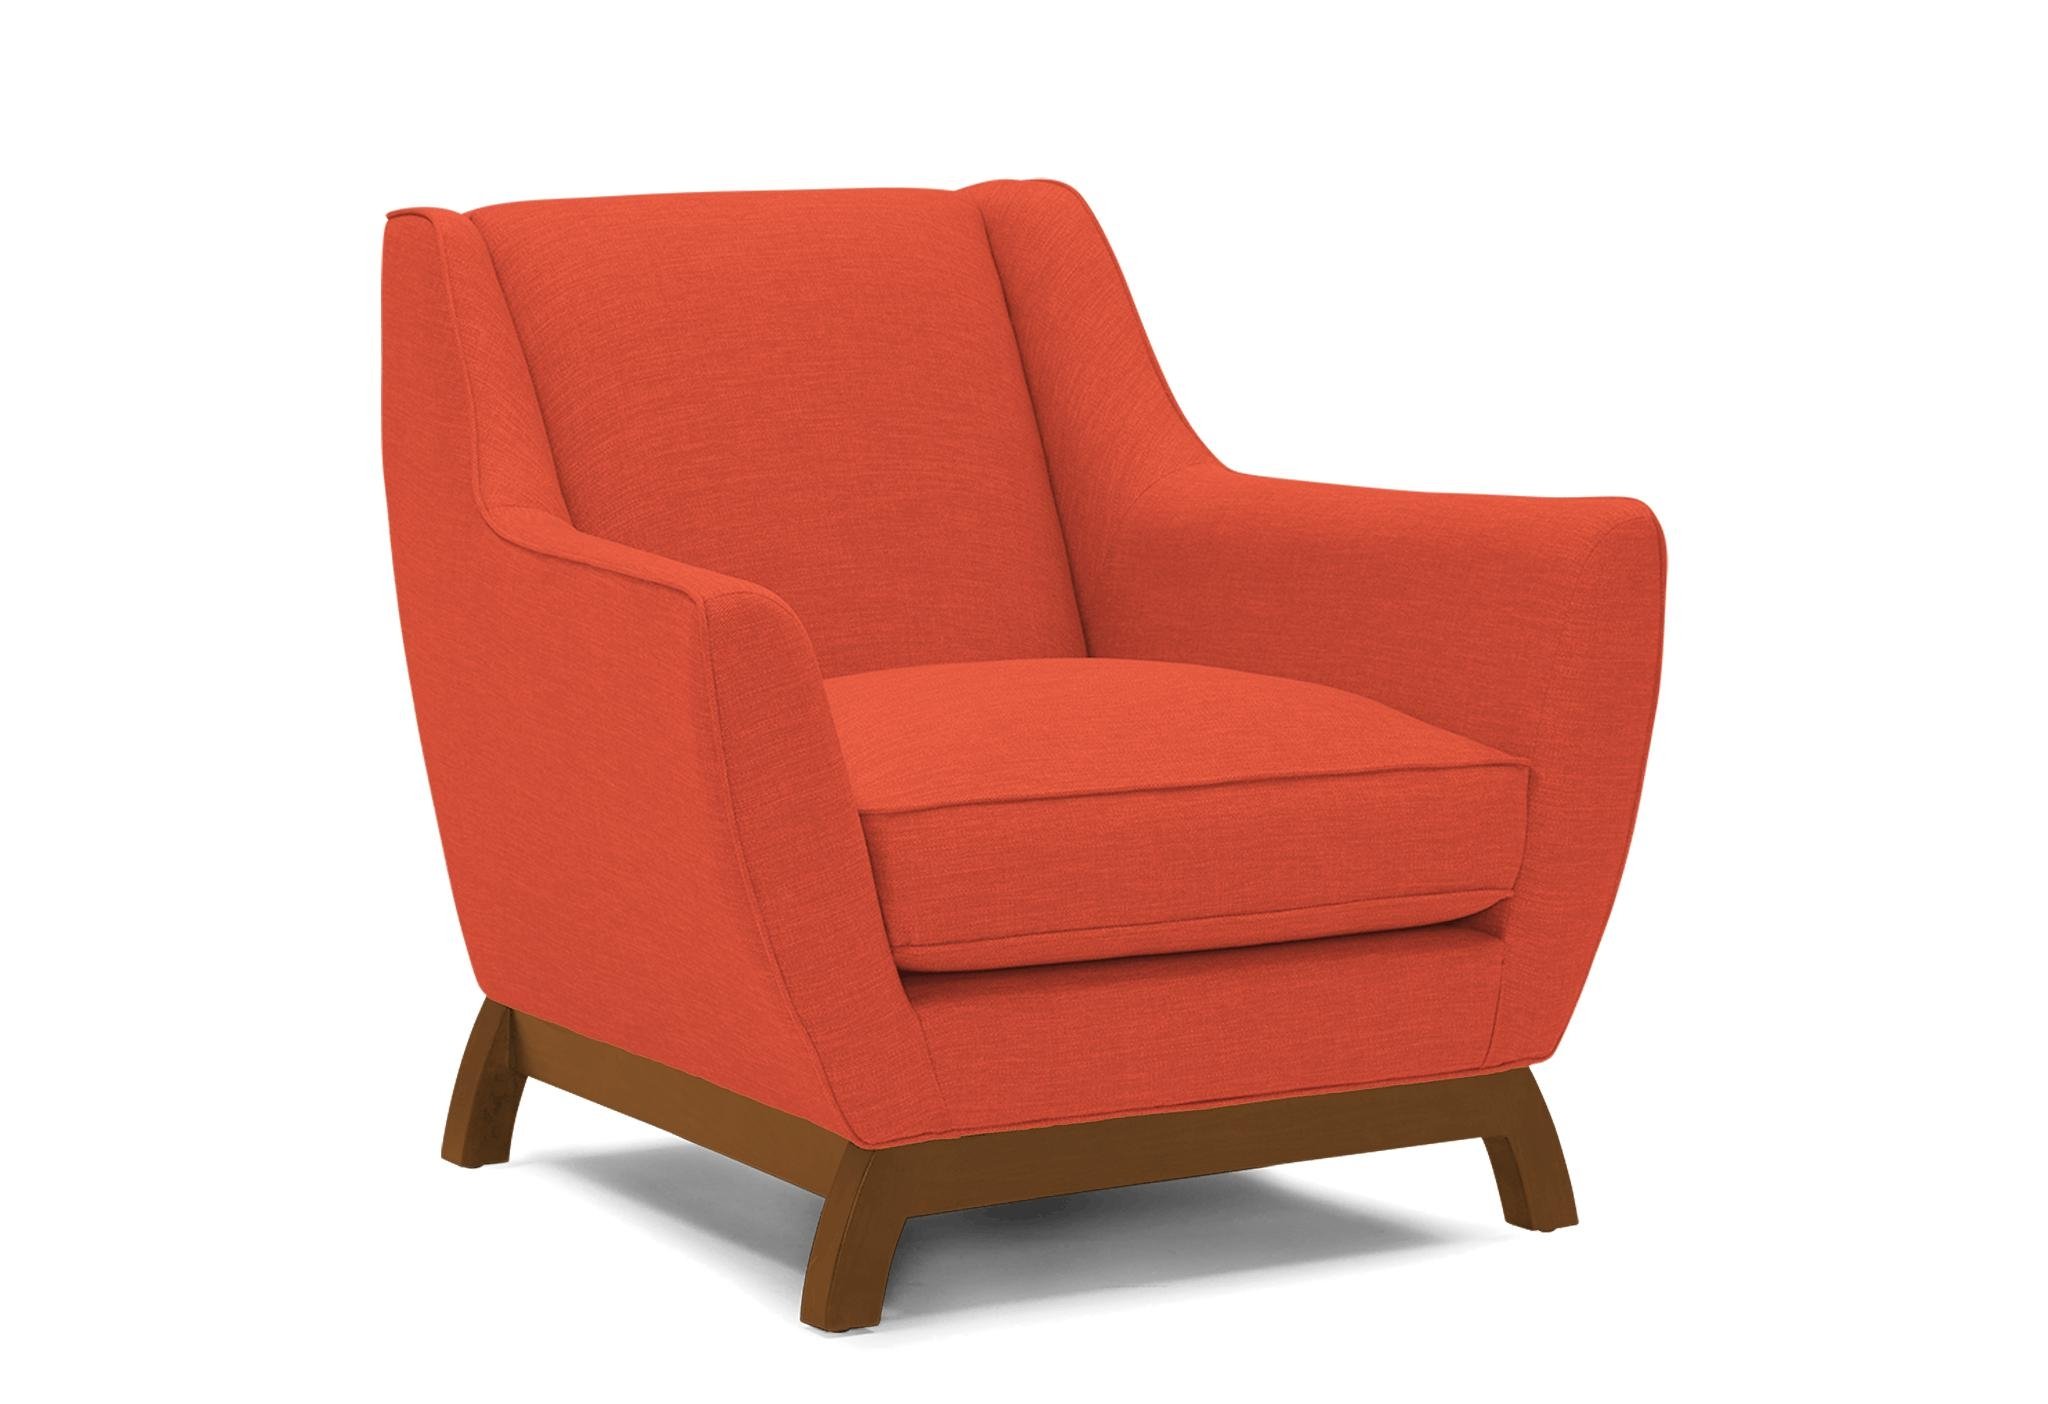 Orange Owen Mid Century Modern Chair - Key Largo Coral - Mocha - Image 1